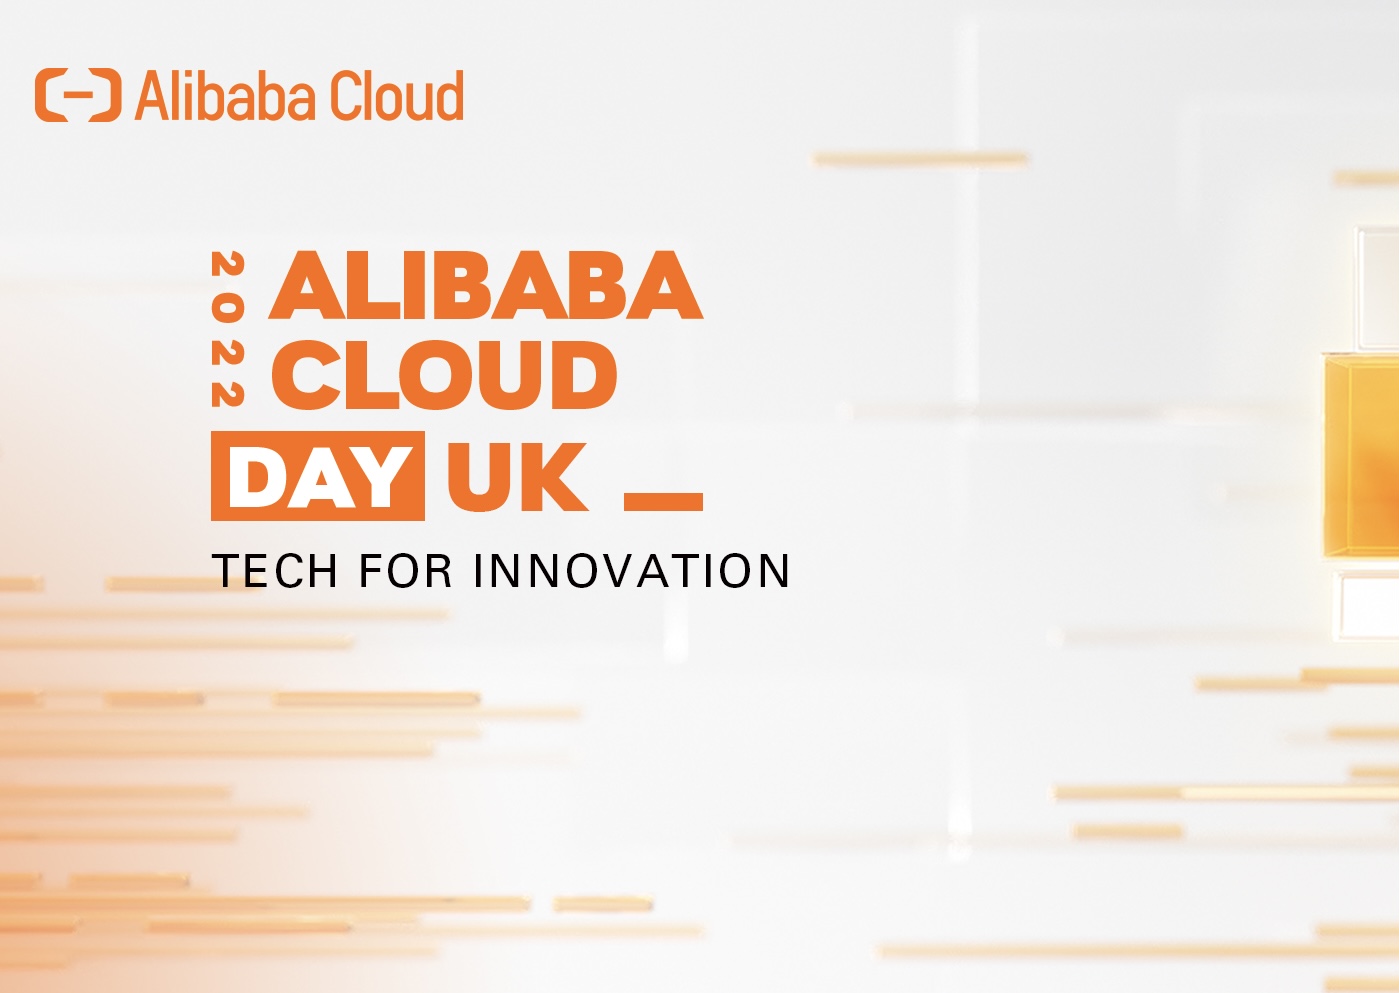 Alibaba Cloud Day - Summer social GBR